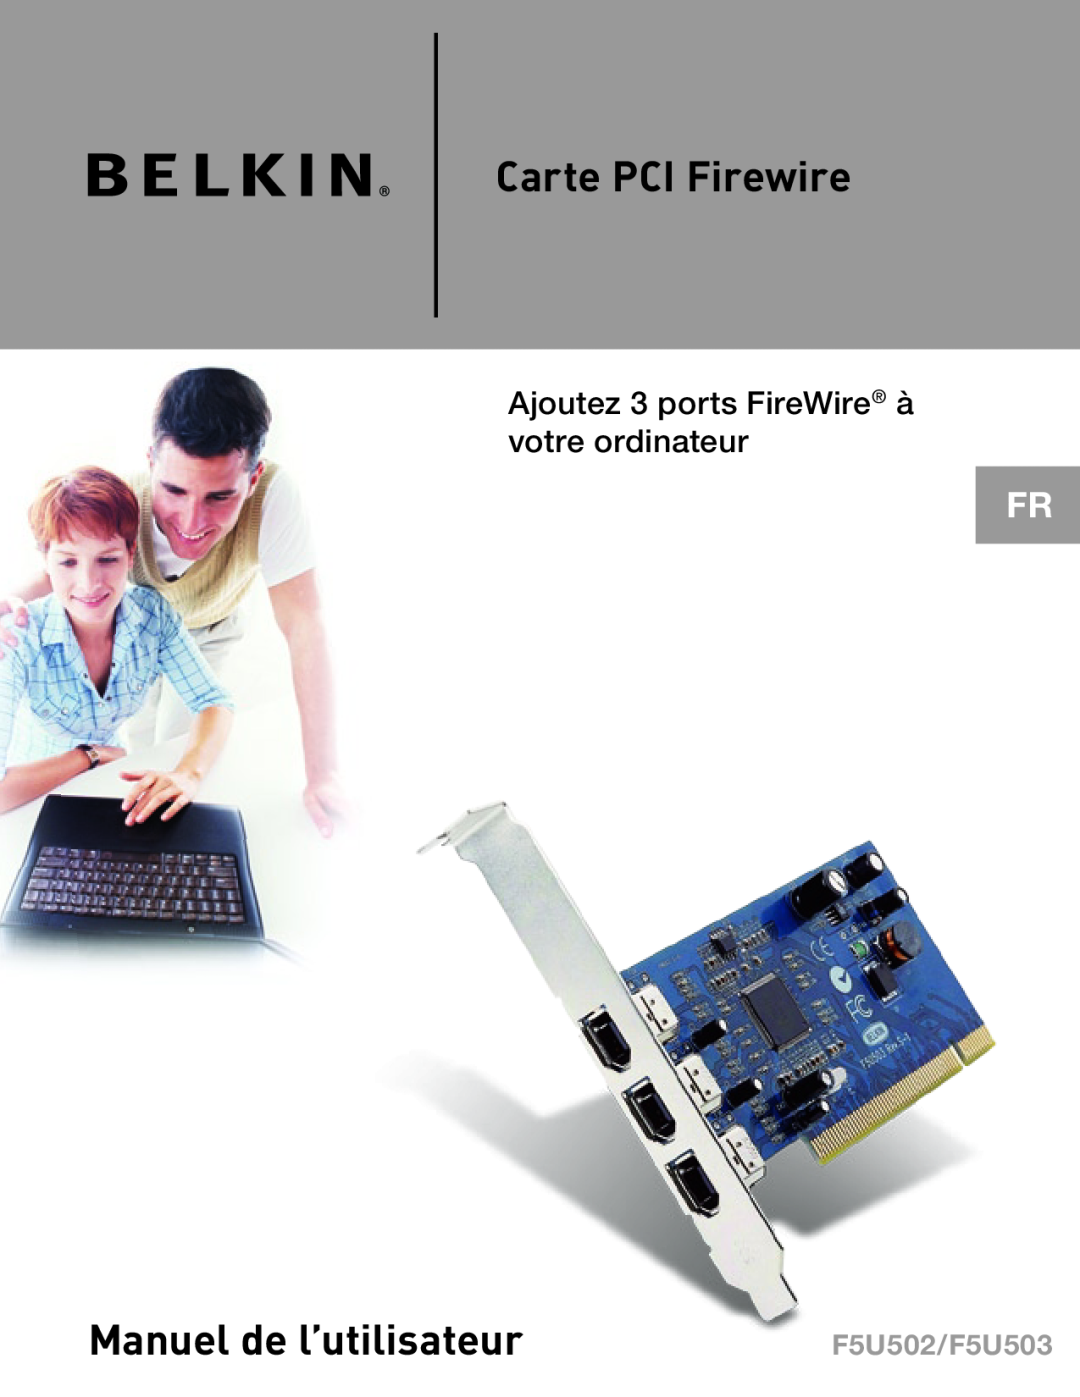 Belkin Carte PCI Firewire, Manuel de l’utilisateur, Ajoutez 3 ports FireWire à votre ordinateur, F5U502/F5U503 